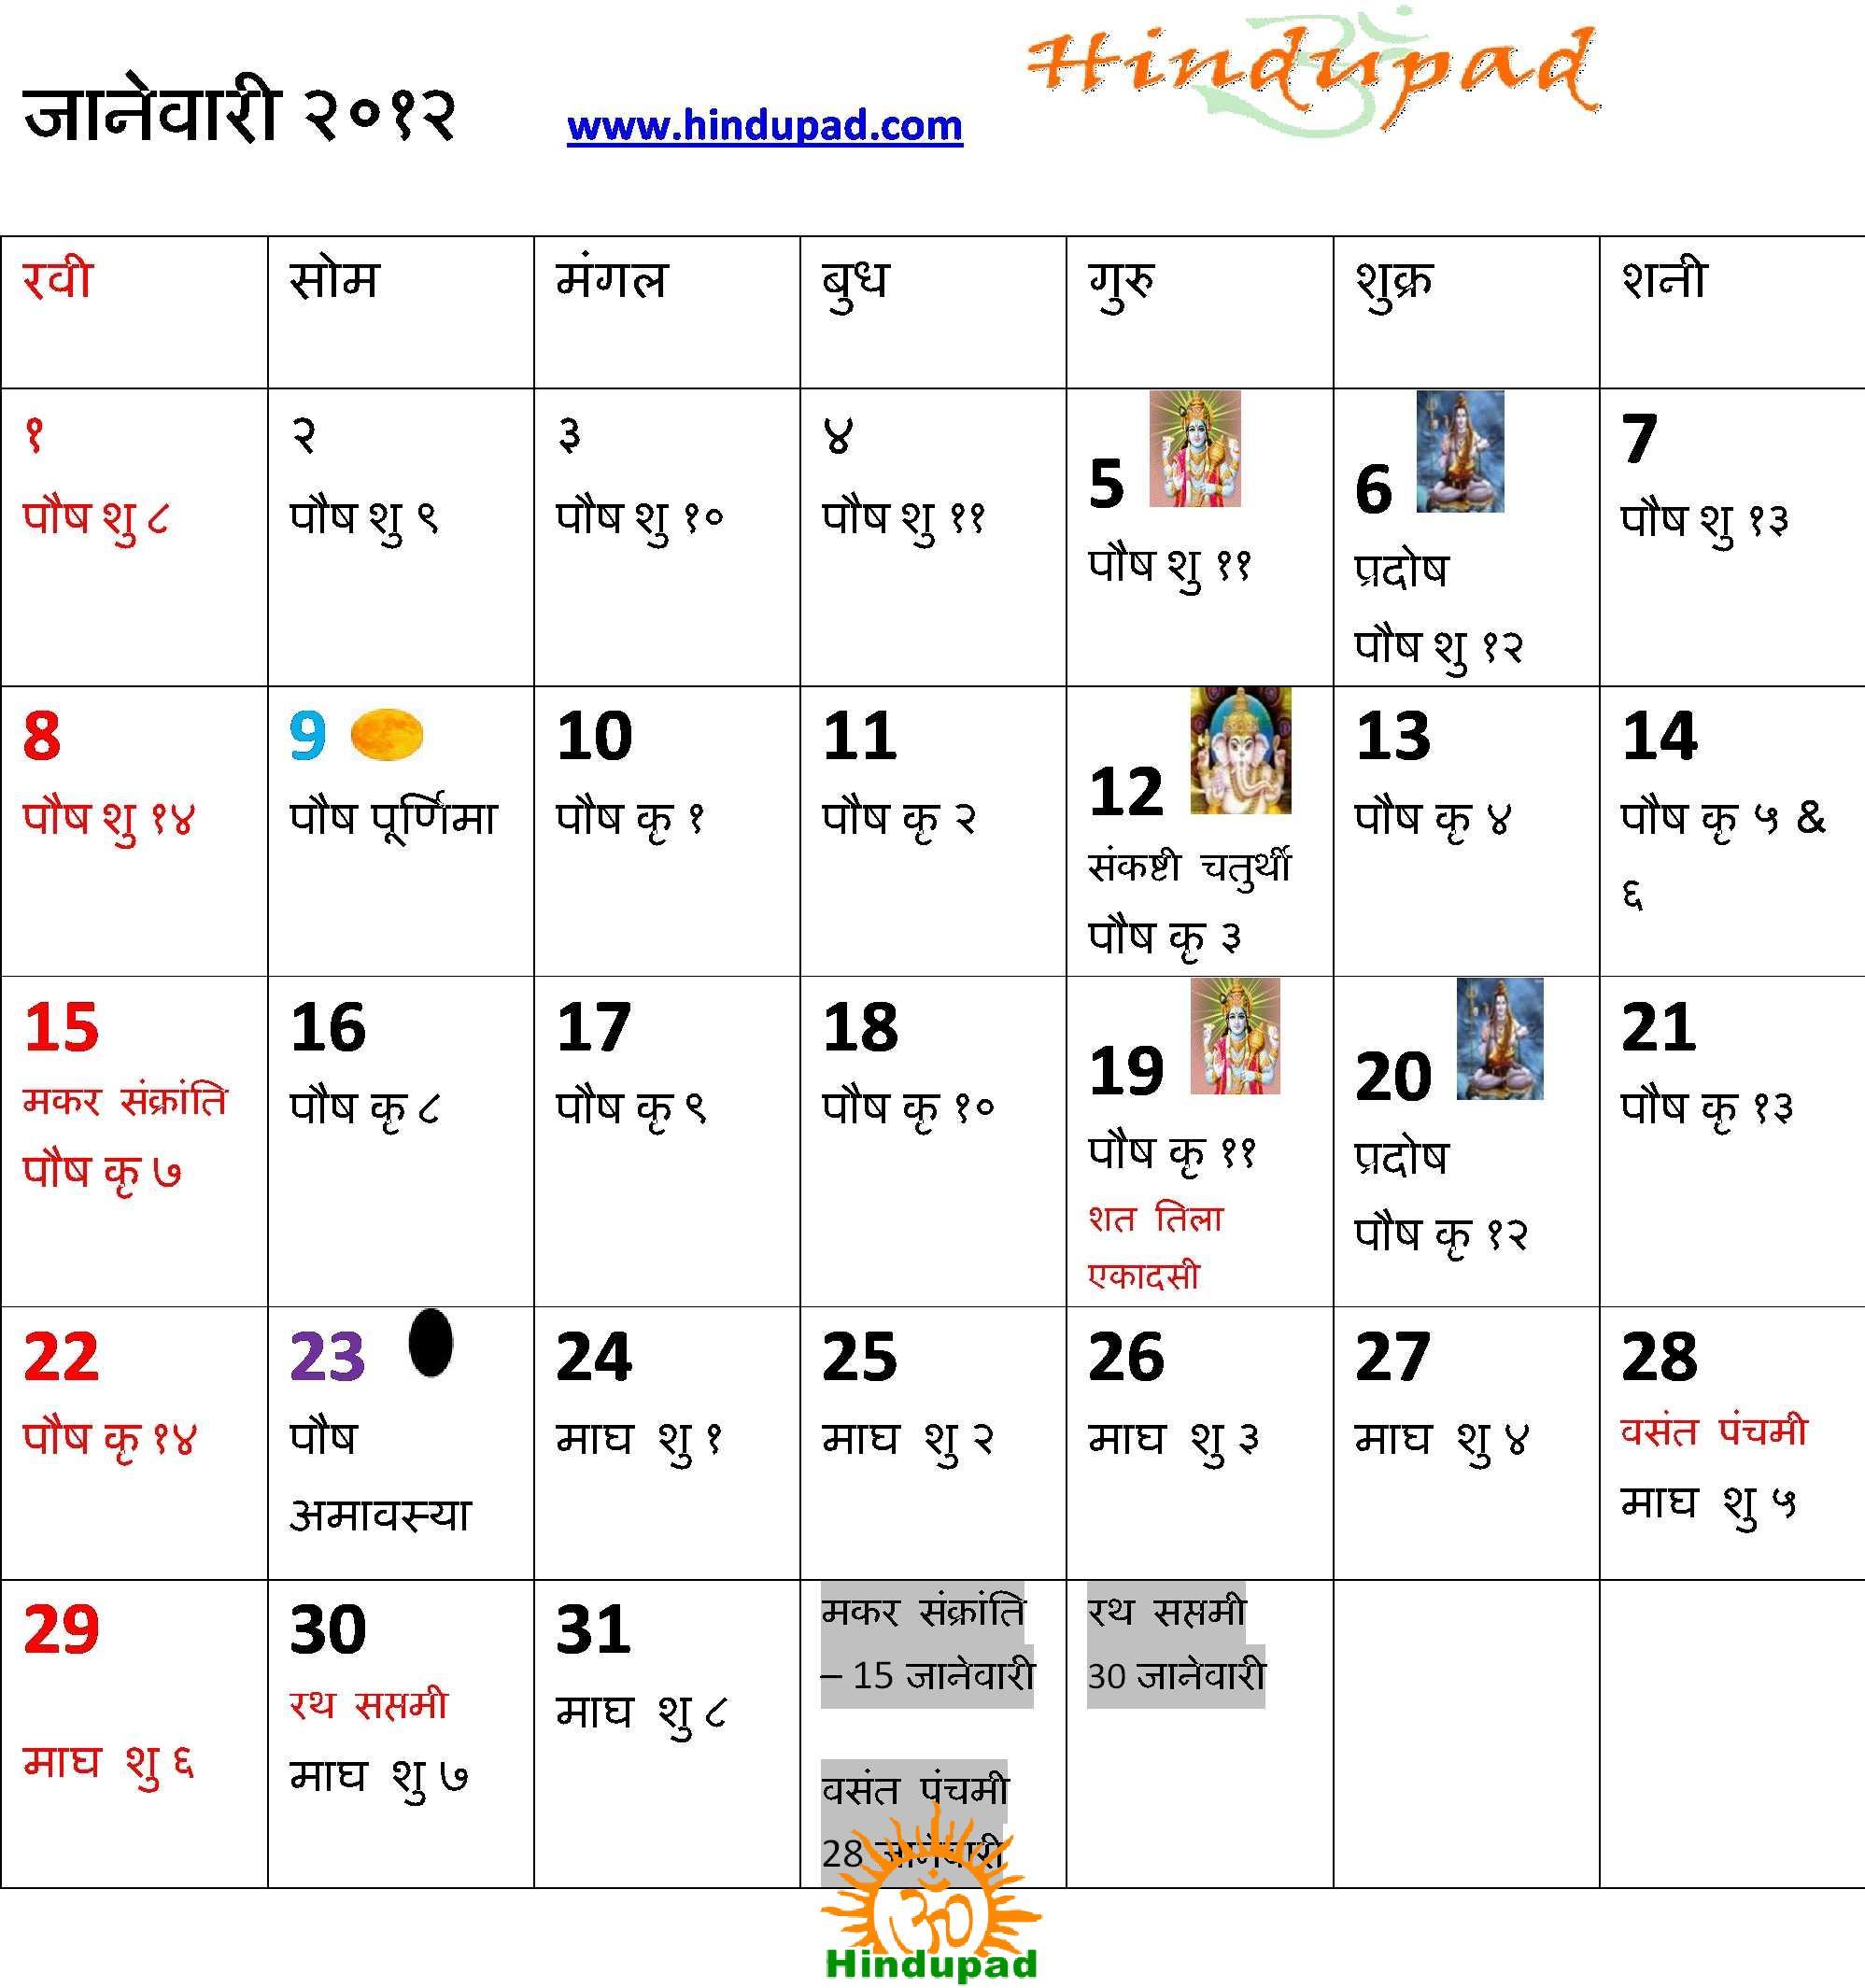 hindu-panchang-calendar-2013-pdf-cineheavy